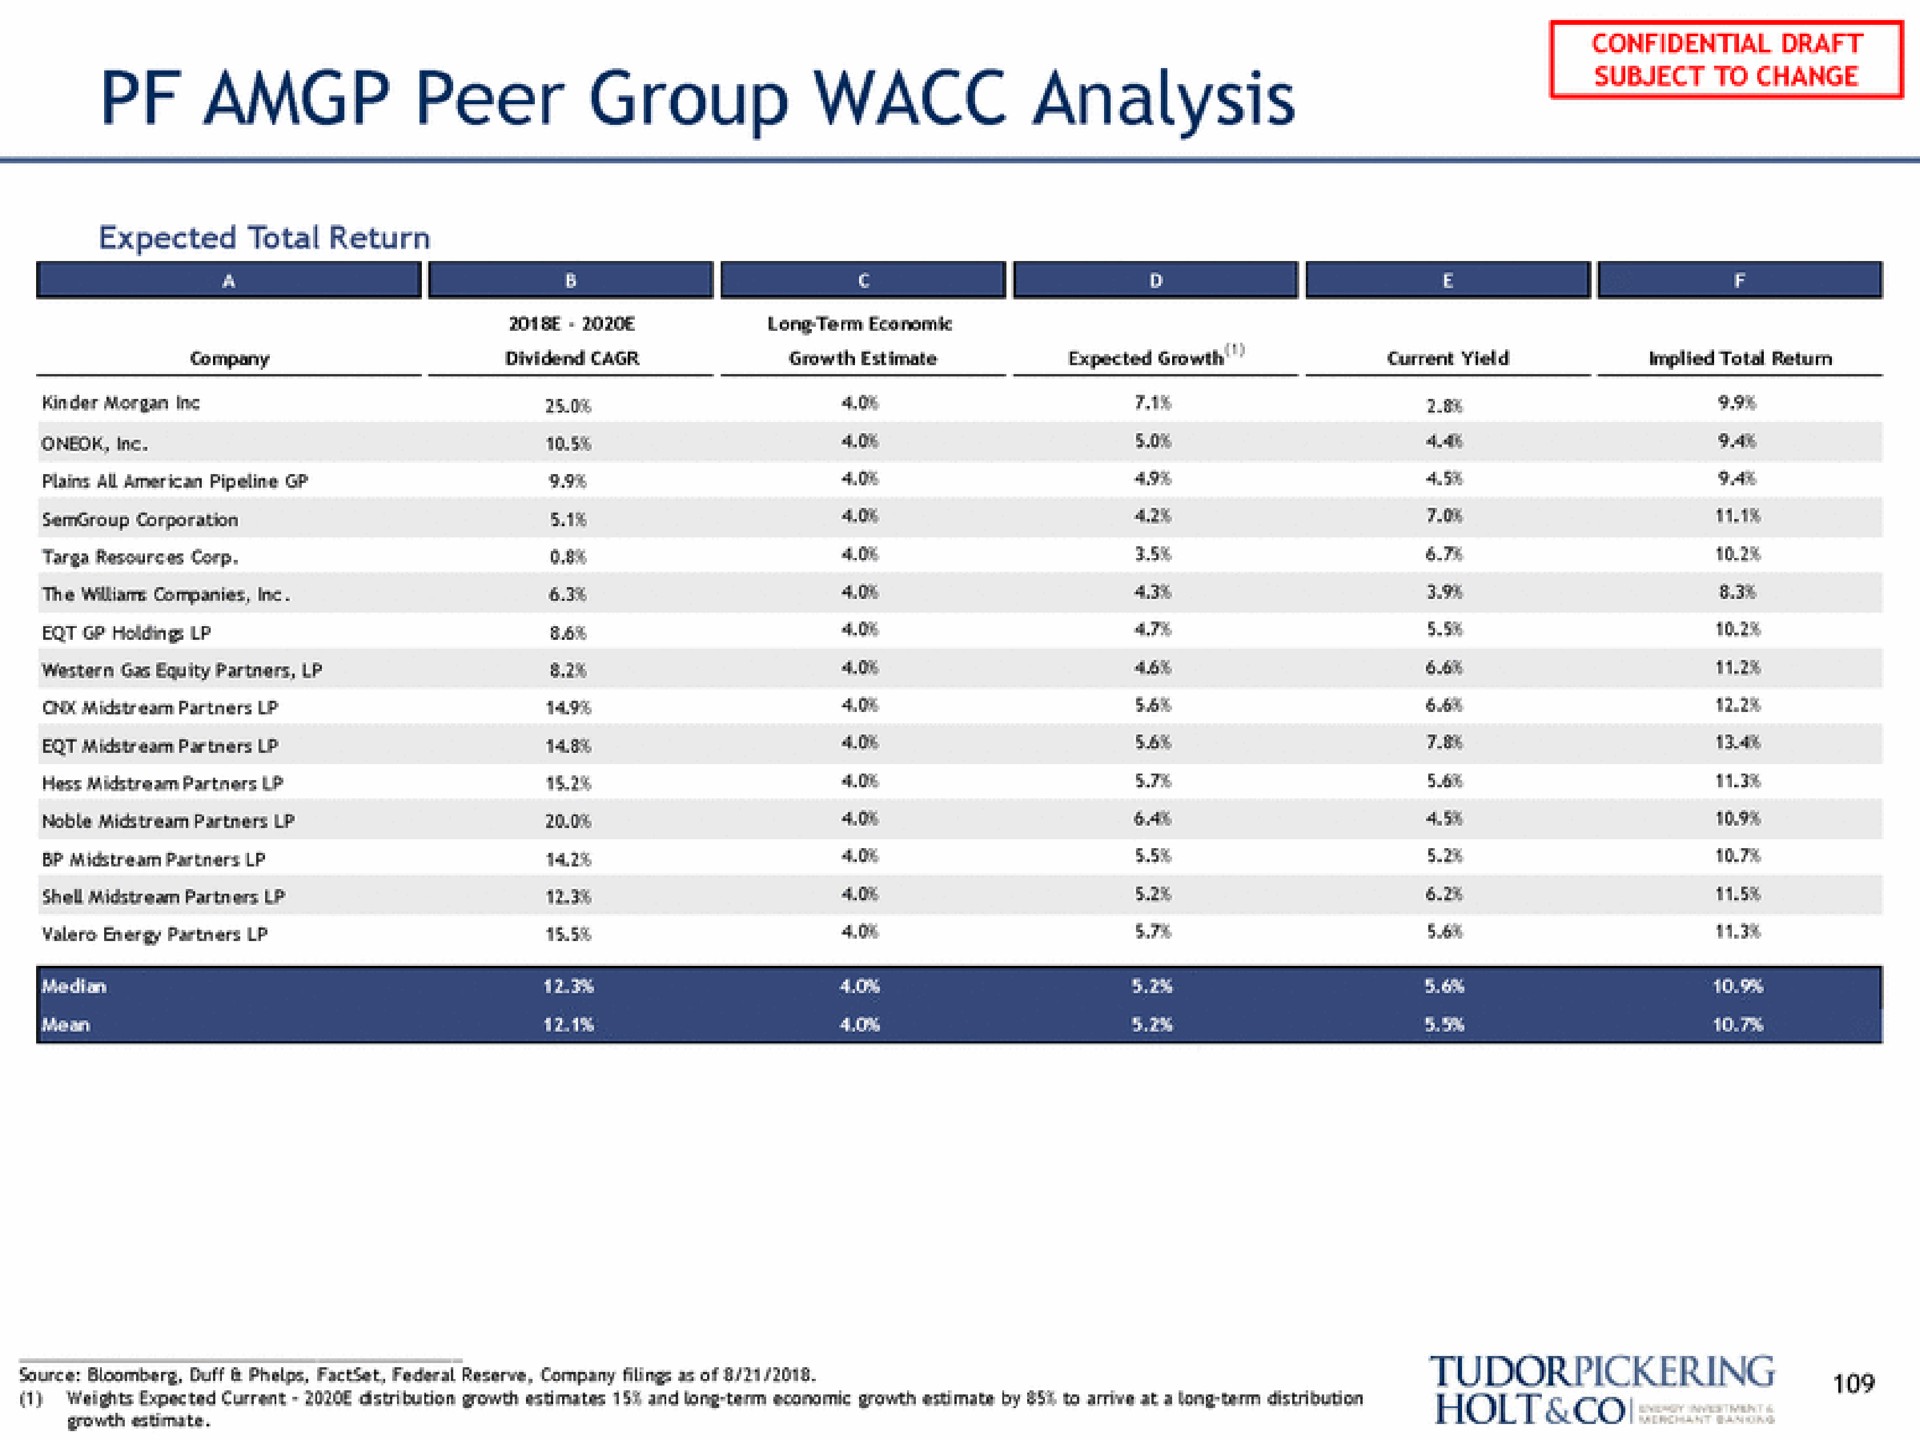 peer group analysis a a a | Tudor, Pickering, Holt & Co